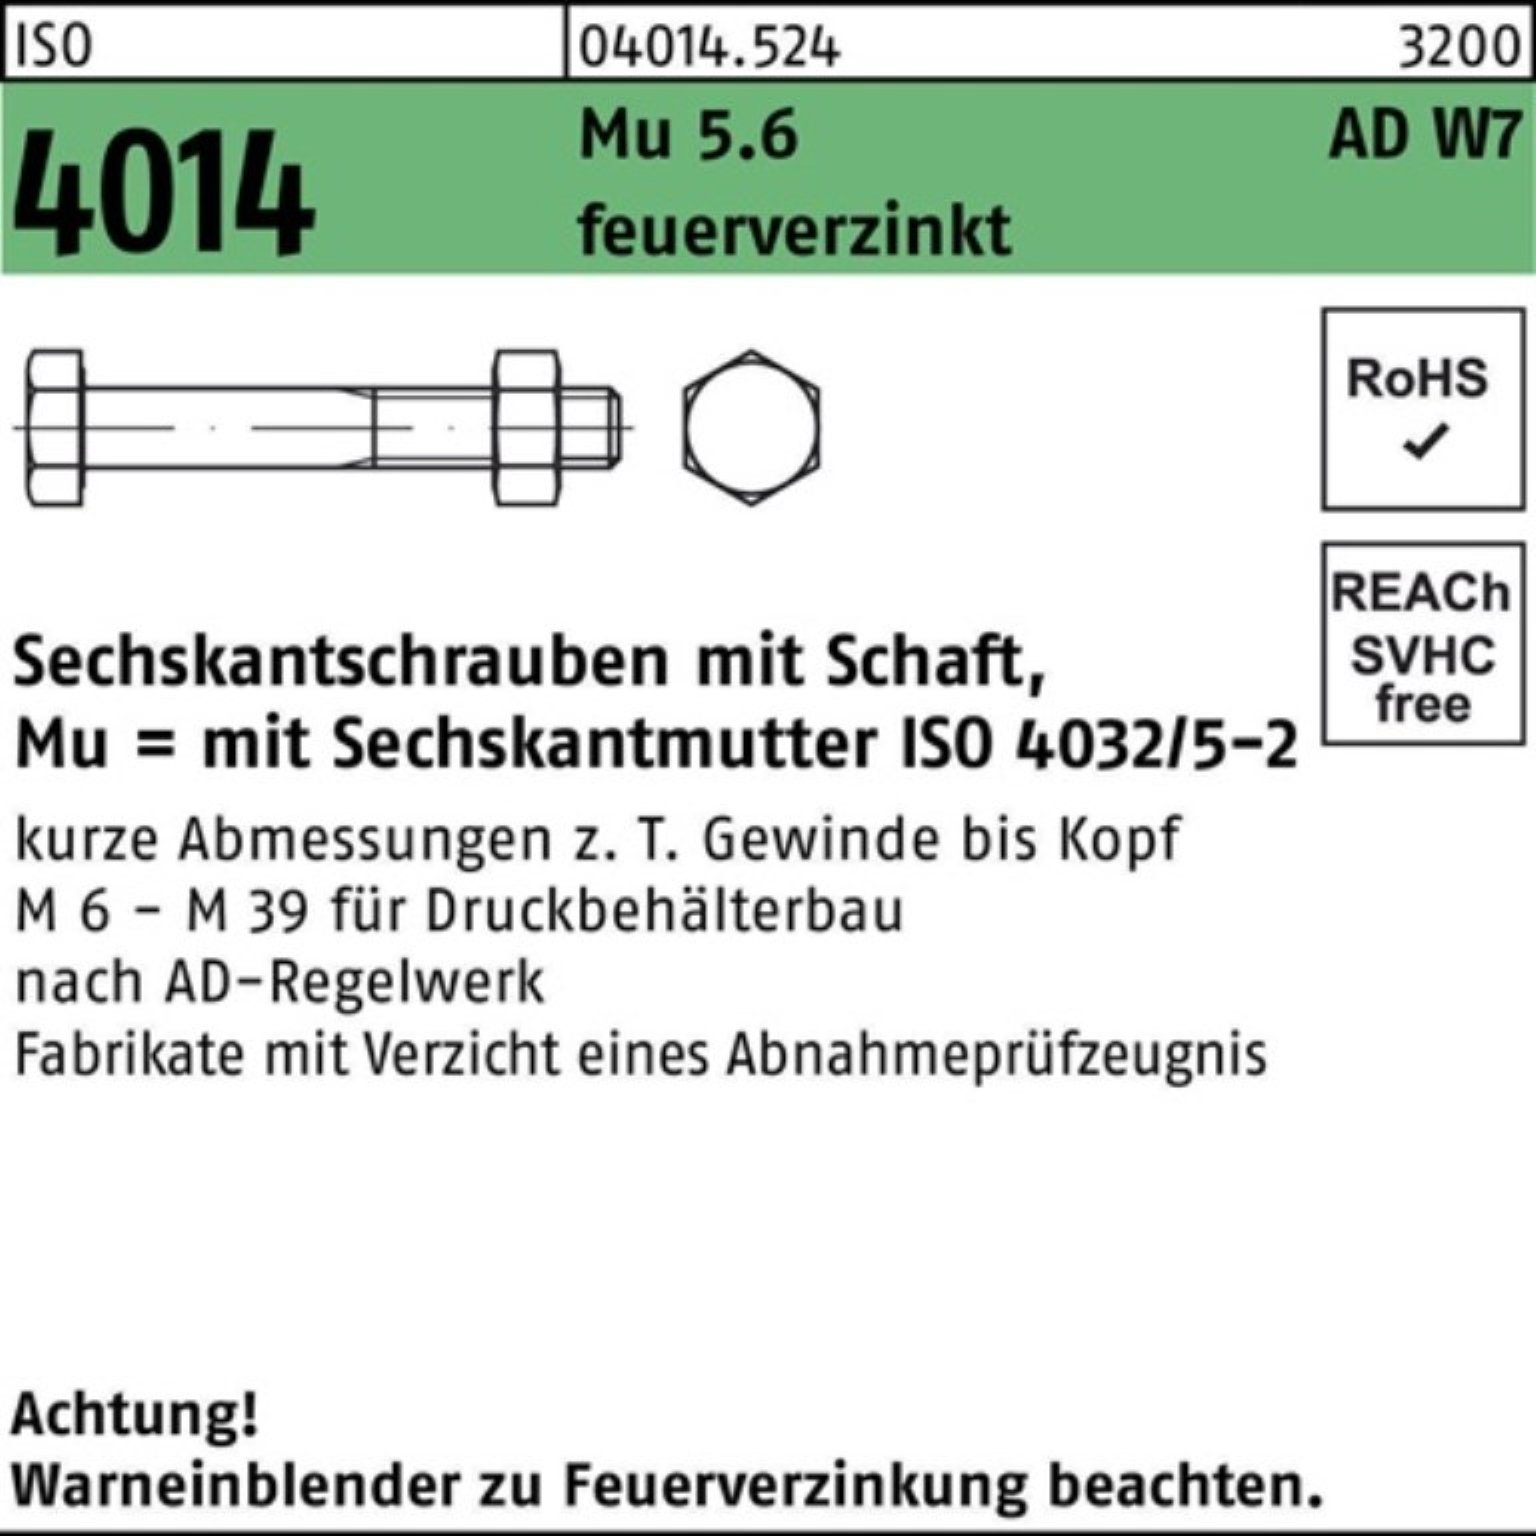 170 5.6 W7 Mu Pack Schaft Sechskantschraube 4014 feuerv 100er ISO Bufab M24x Sechskantschraube